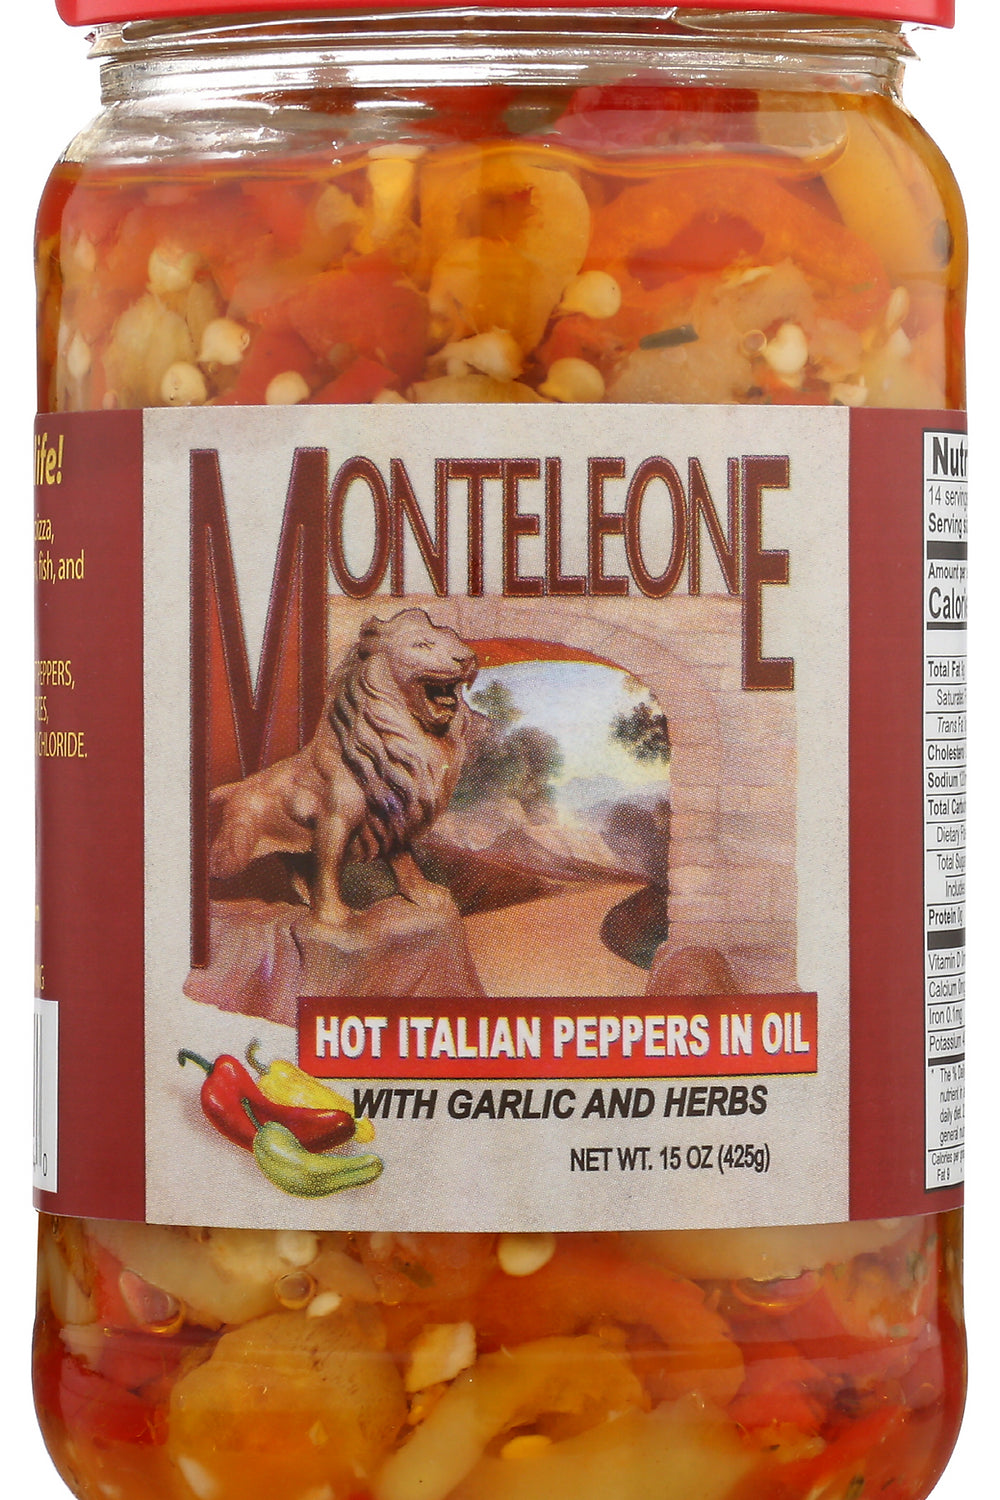 Hot Montelone Peppers